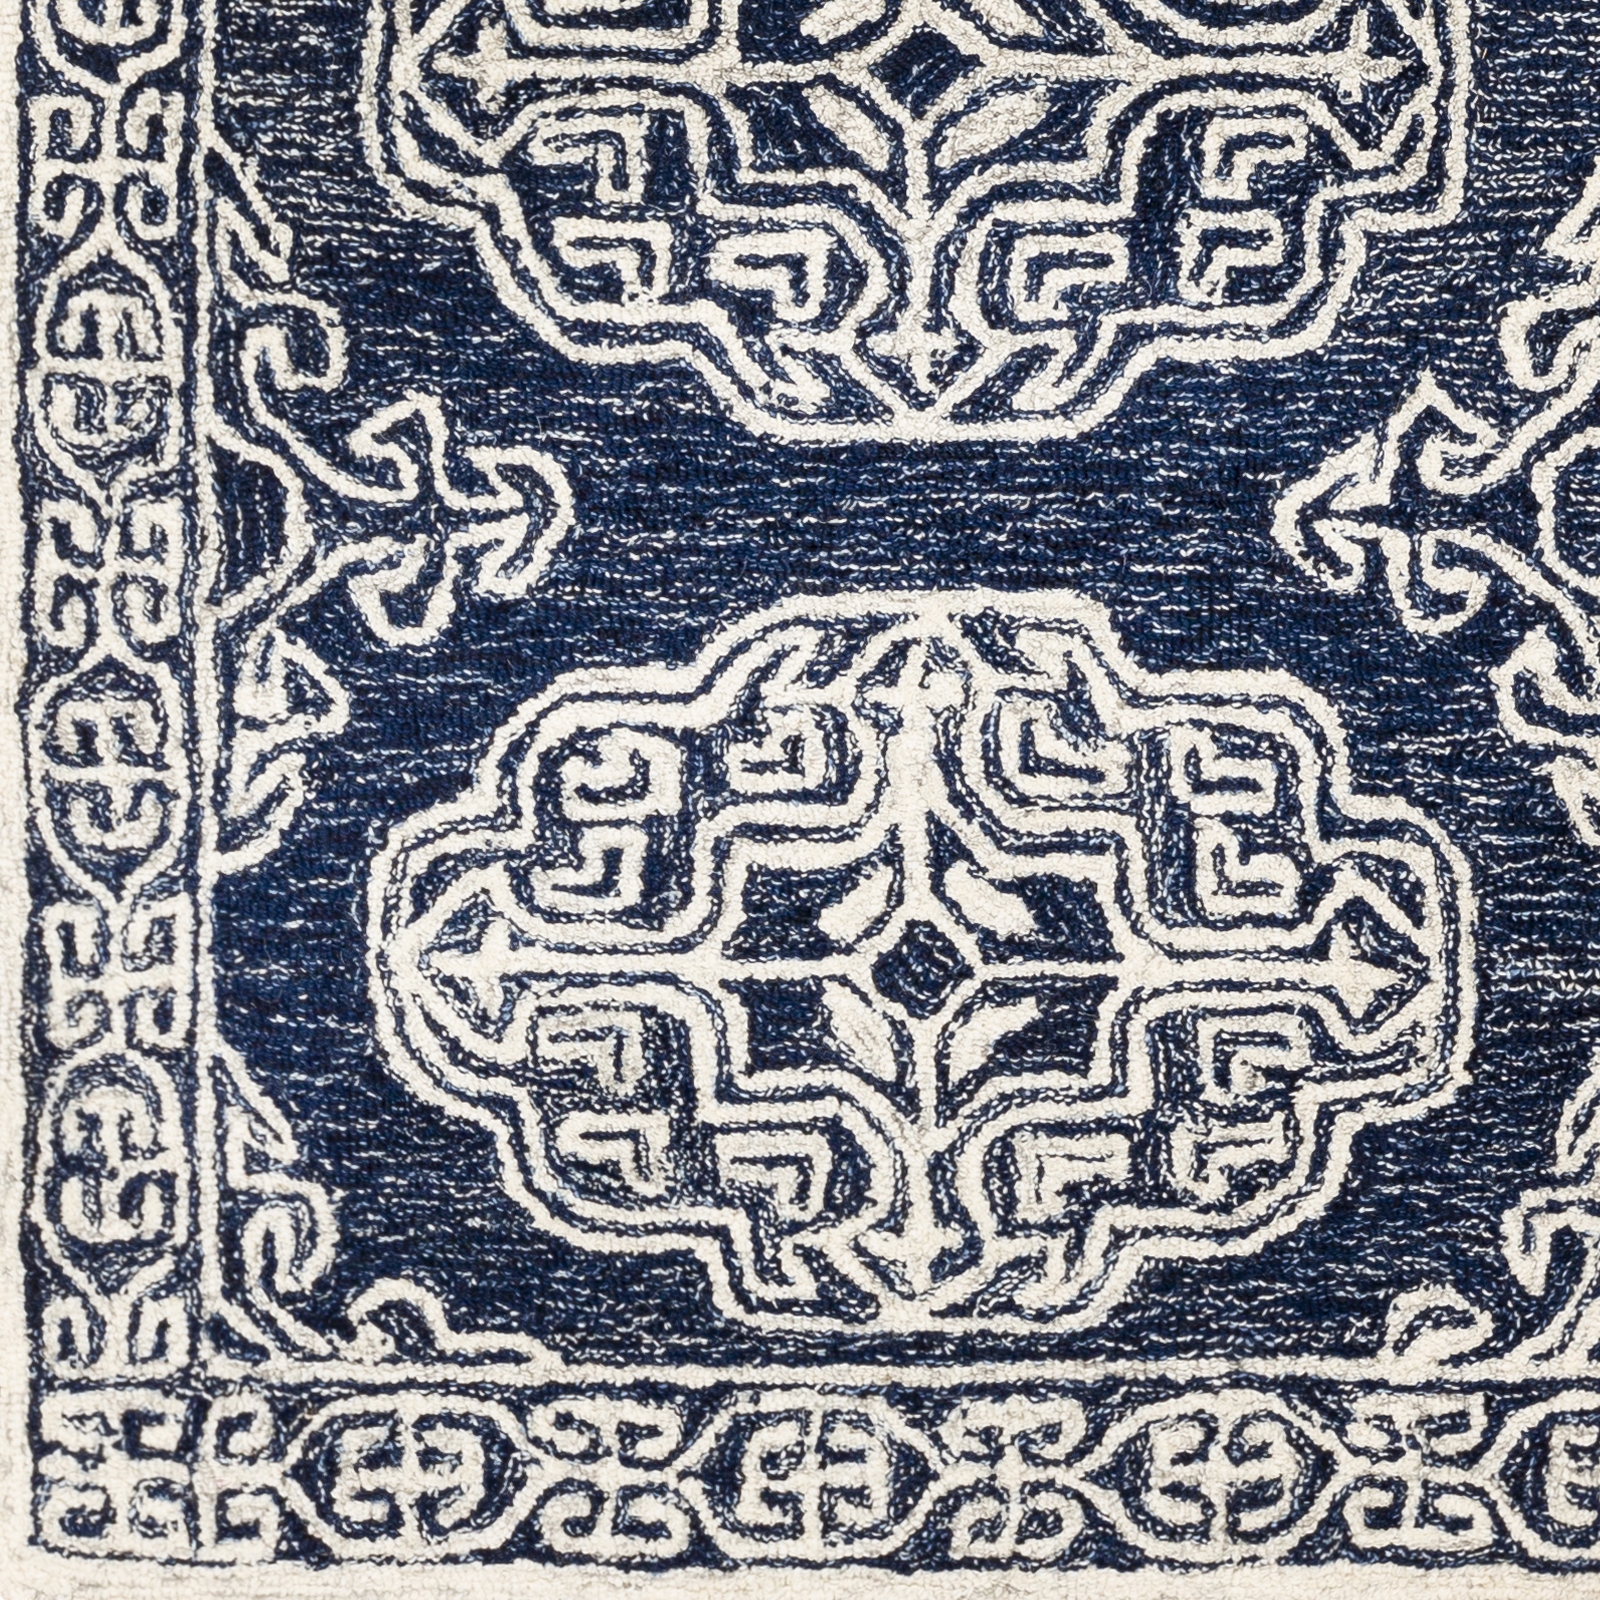 Granada Rug, 2' x 3' - Image 5